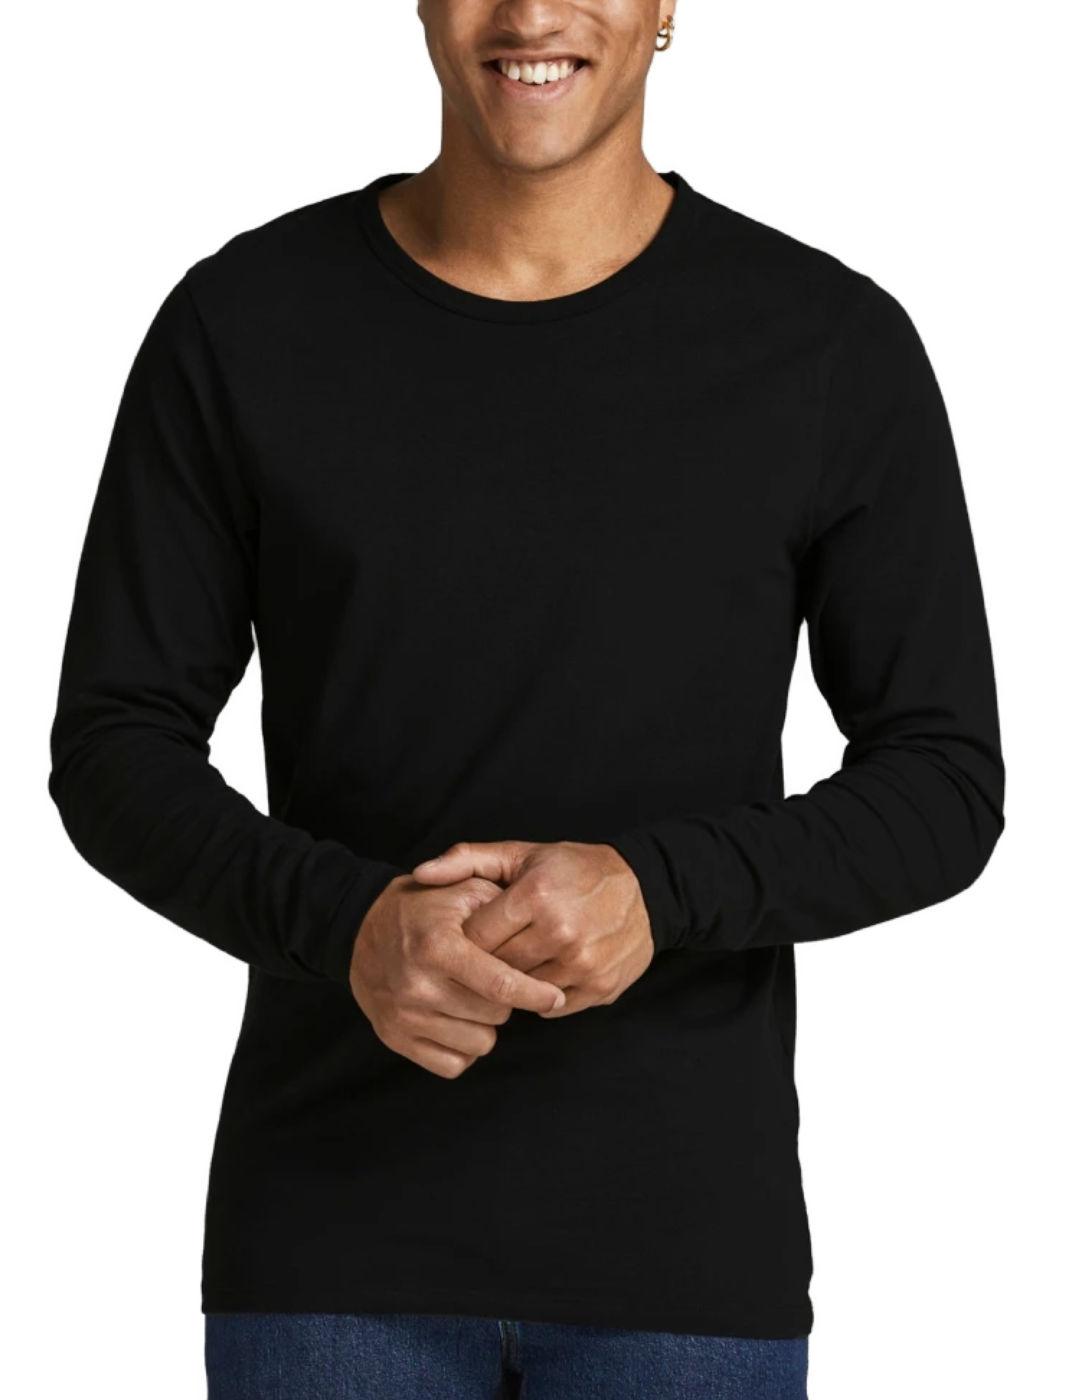 Camiseta Jack&jones Basic negro manga larga de hombre